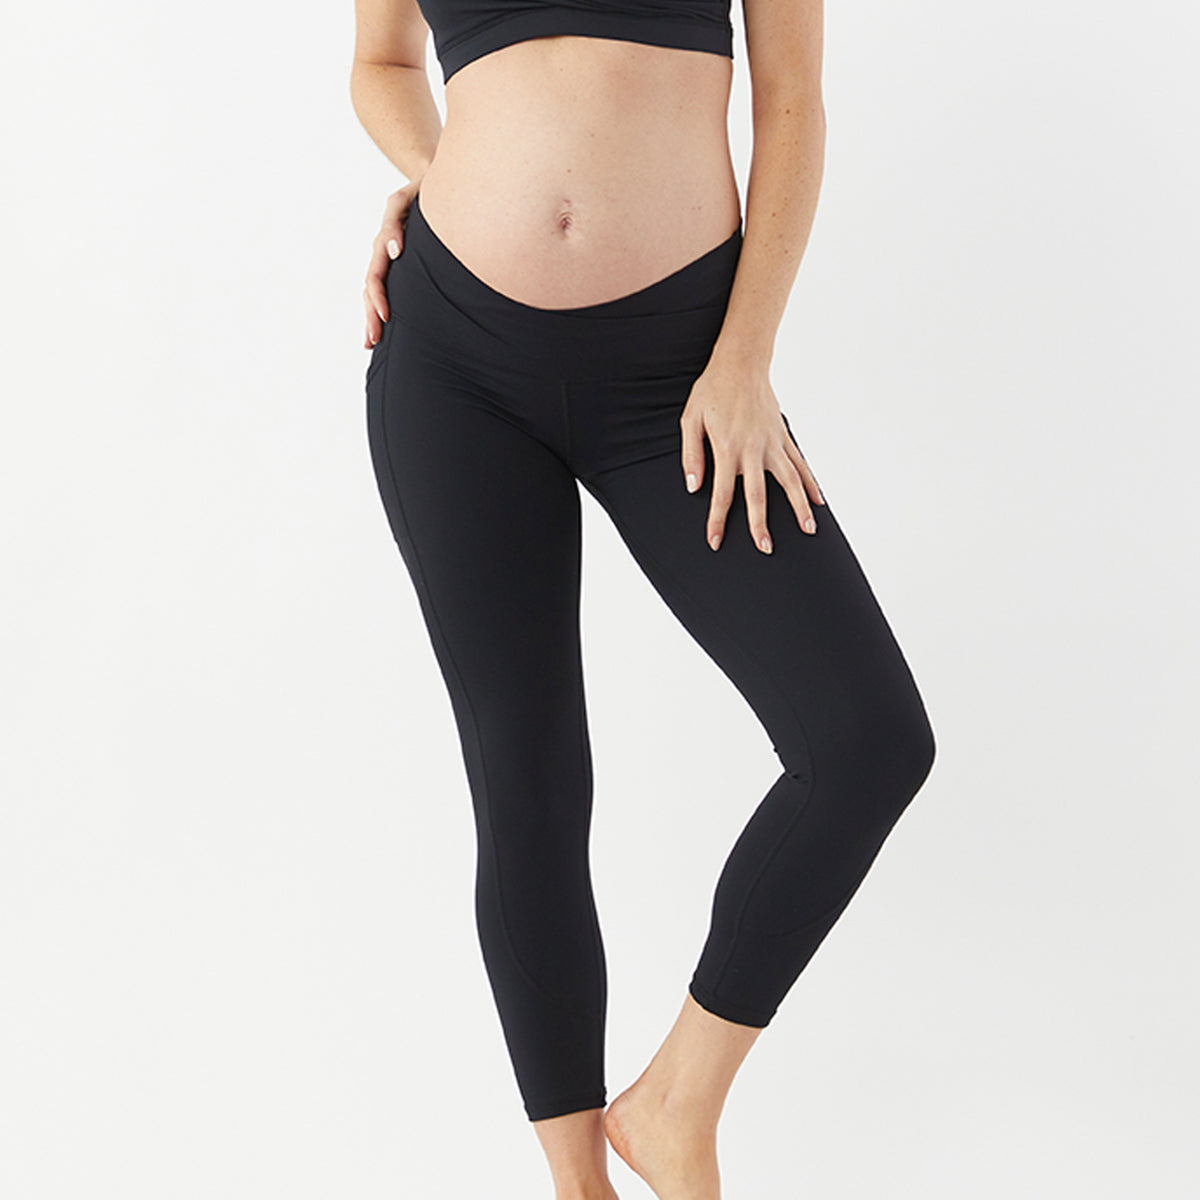 Cotton:On Maternity seamless rib 7/8 activewear leggings in black